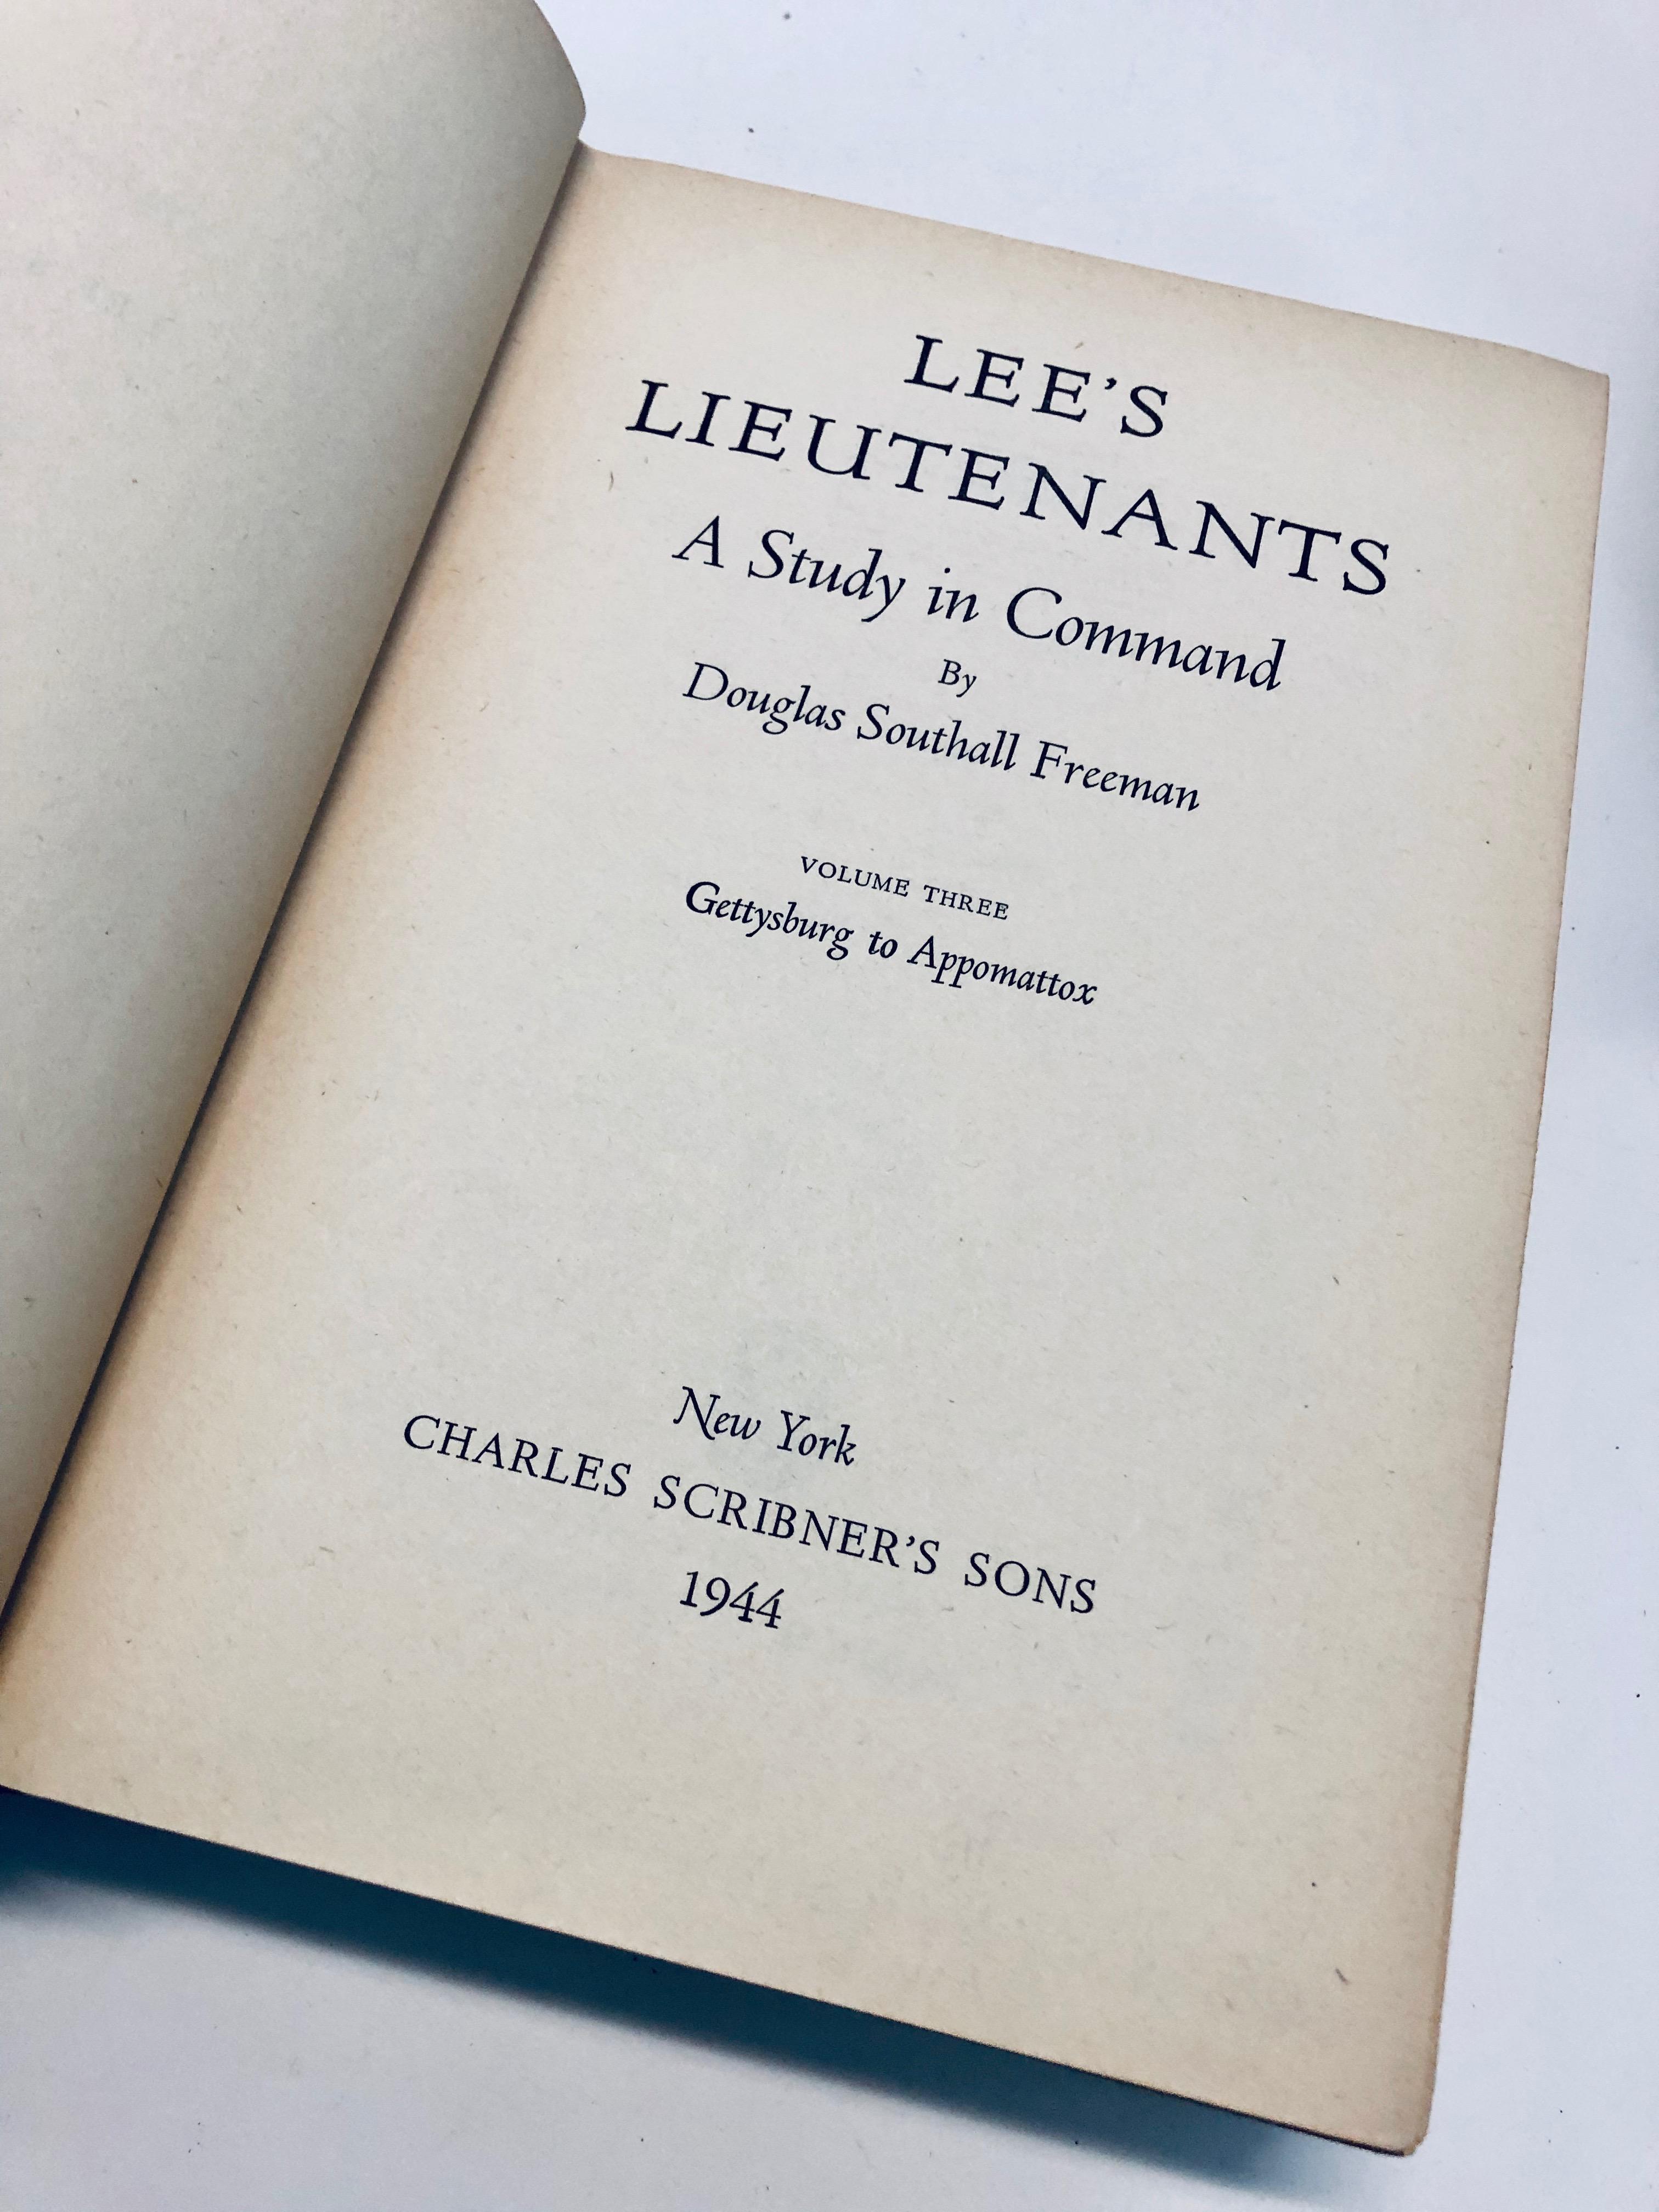 Lee's Lieutenants: A Study in Command THREE VOLUME SET by Douglas Southall Freeman (1944) CIVIL WAR